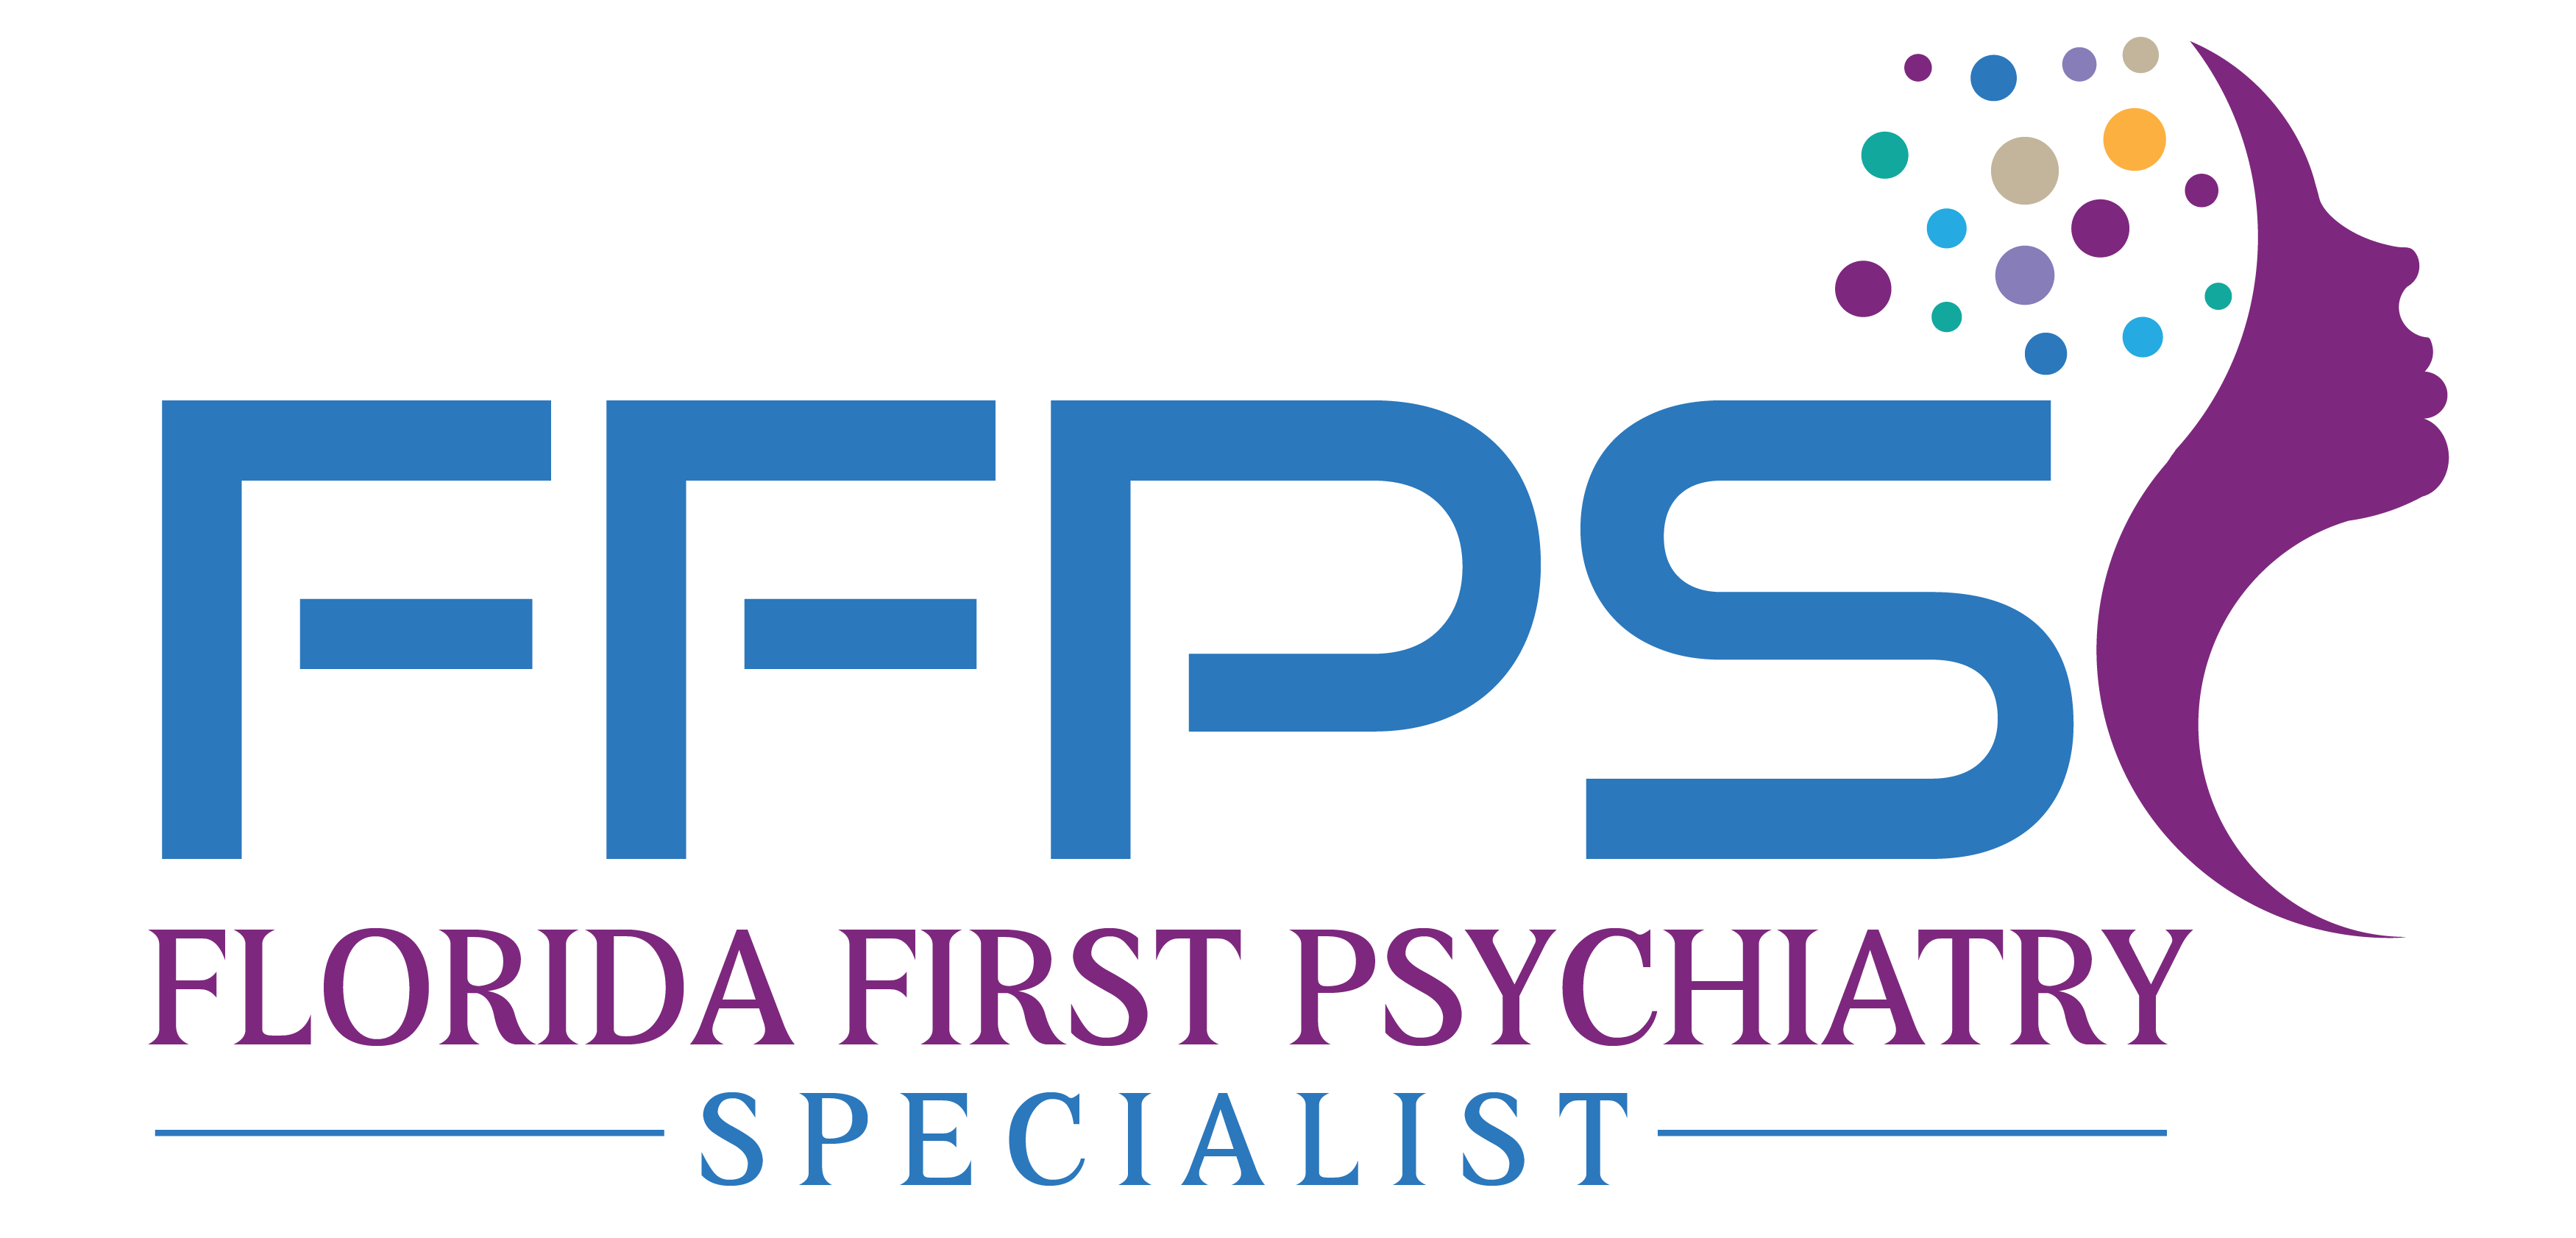 Florida First Psychiatry Specialist